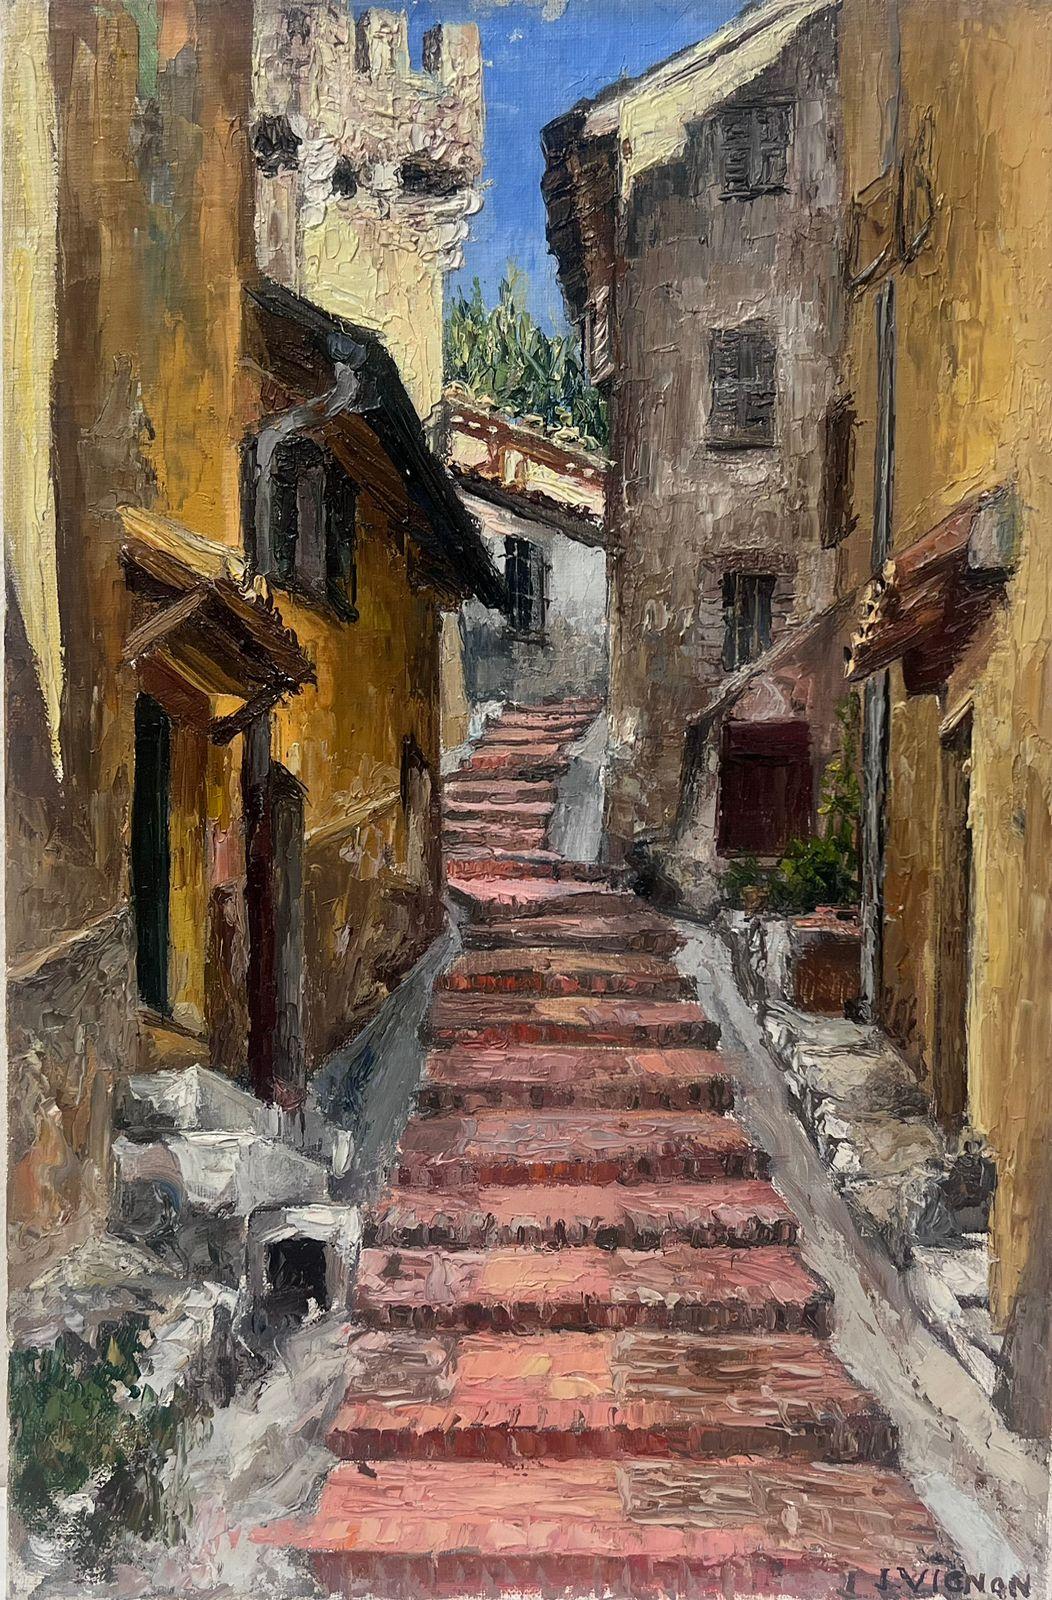 Josine Vignon Landscape Painting - 1940's French Post Impressionist Oil Painting Village Street Pink Steps Leading